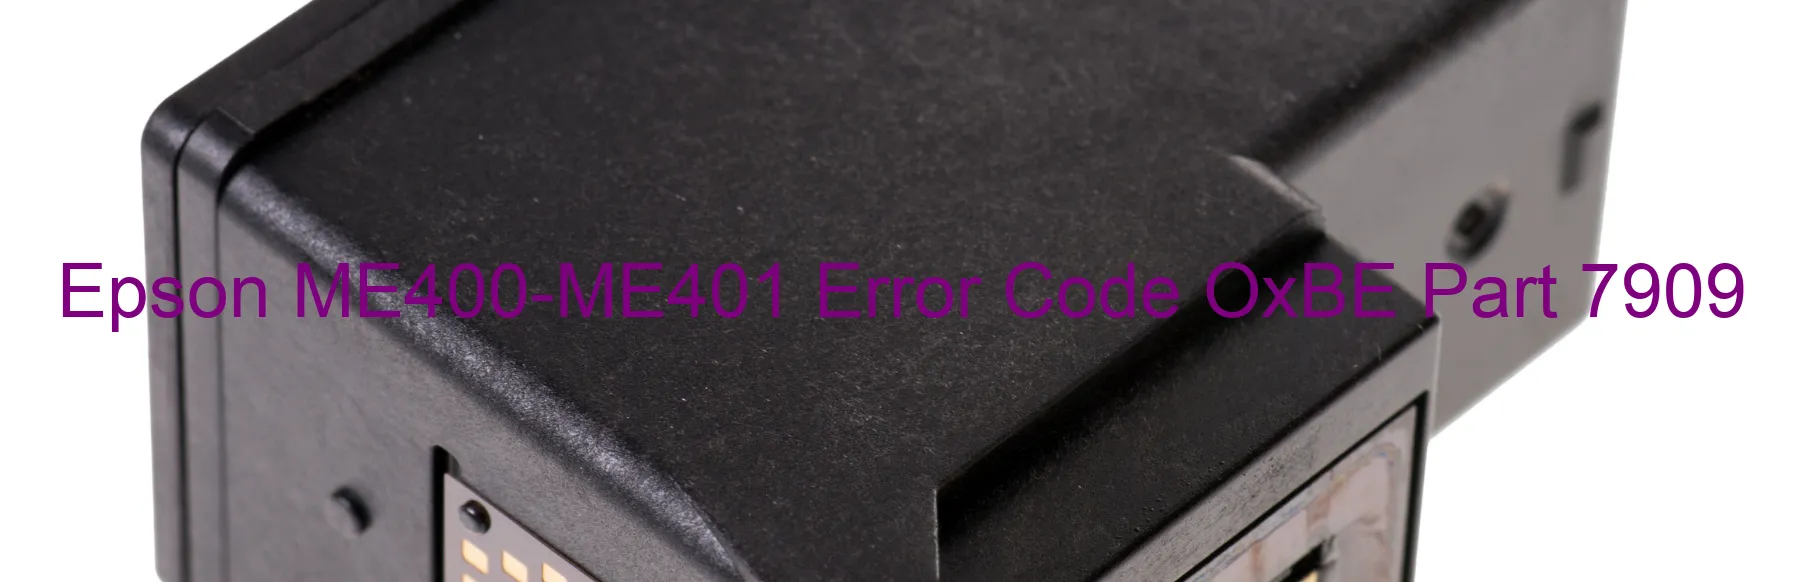 Epson ME400-ME401 Error Code OxBE Part 7909